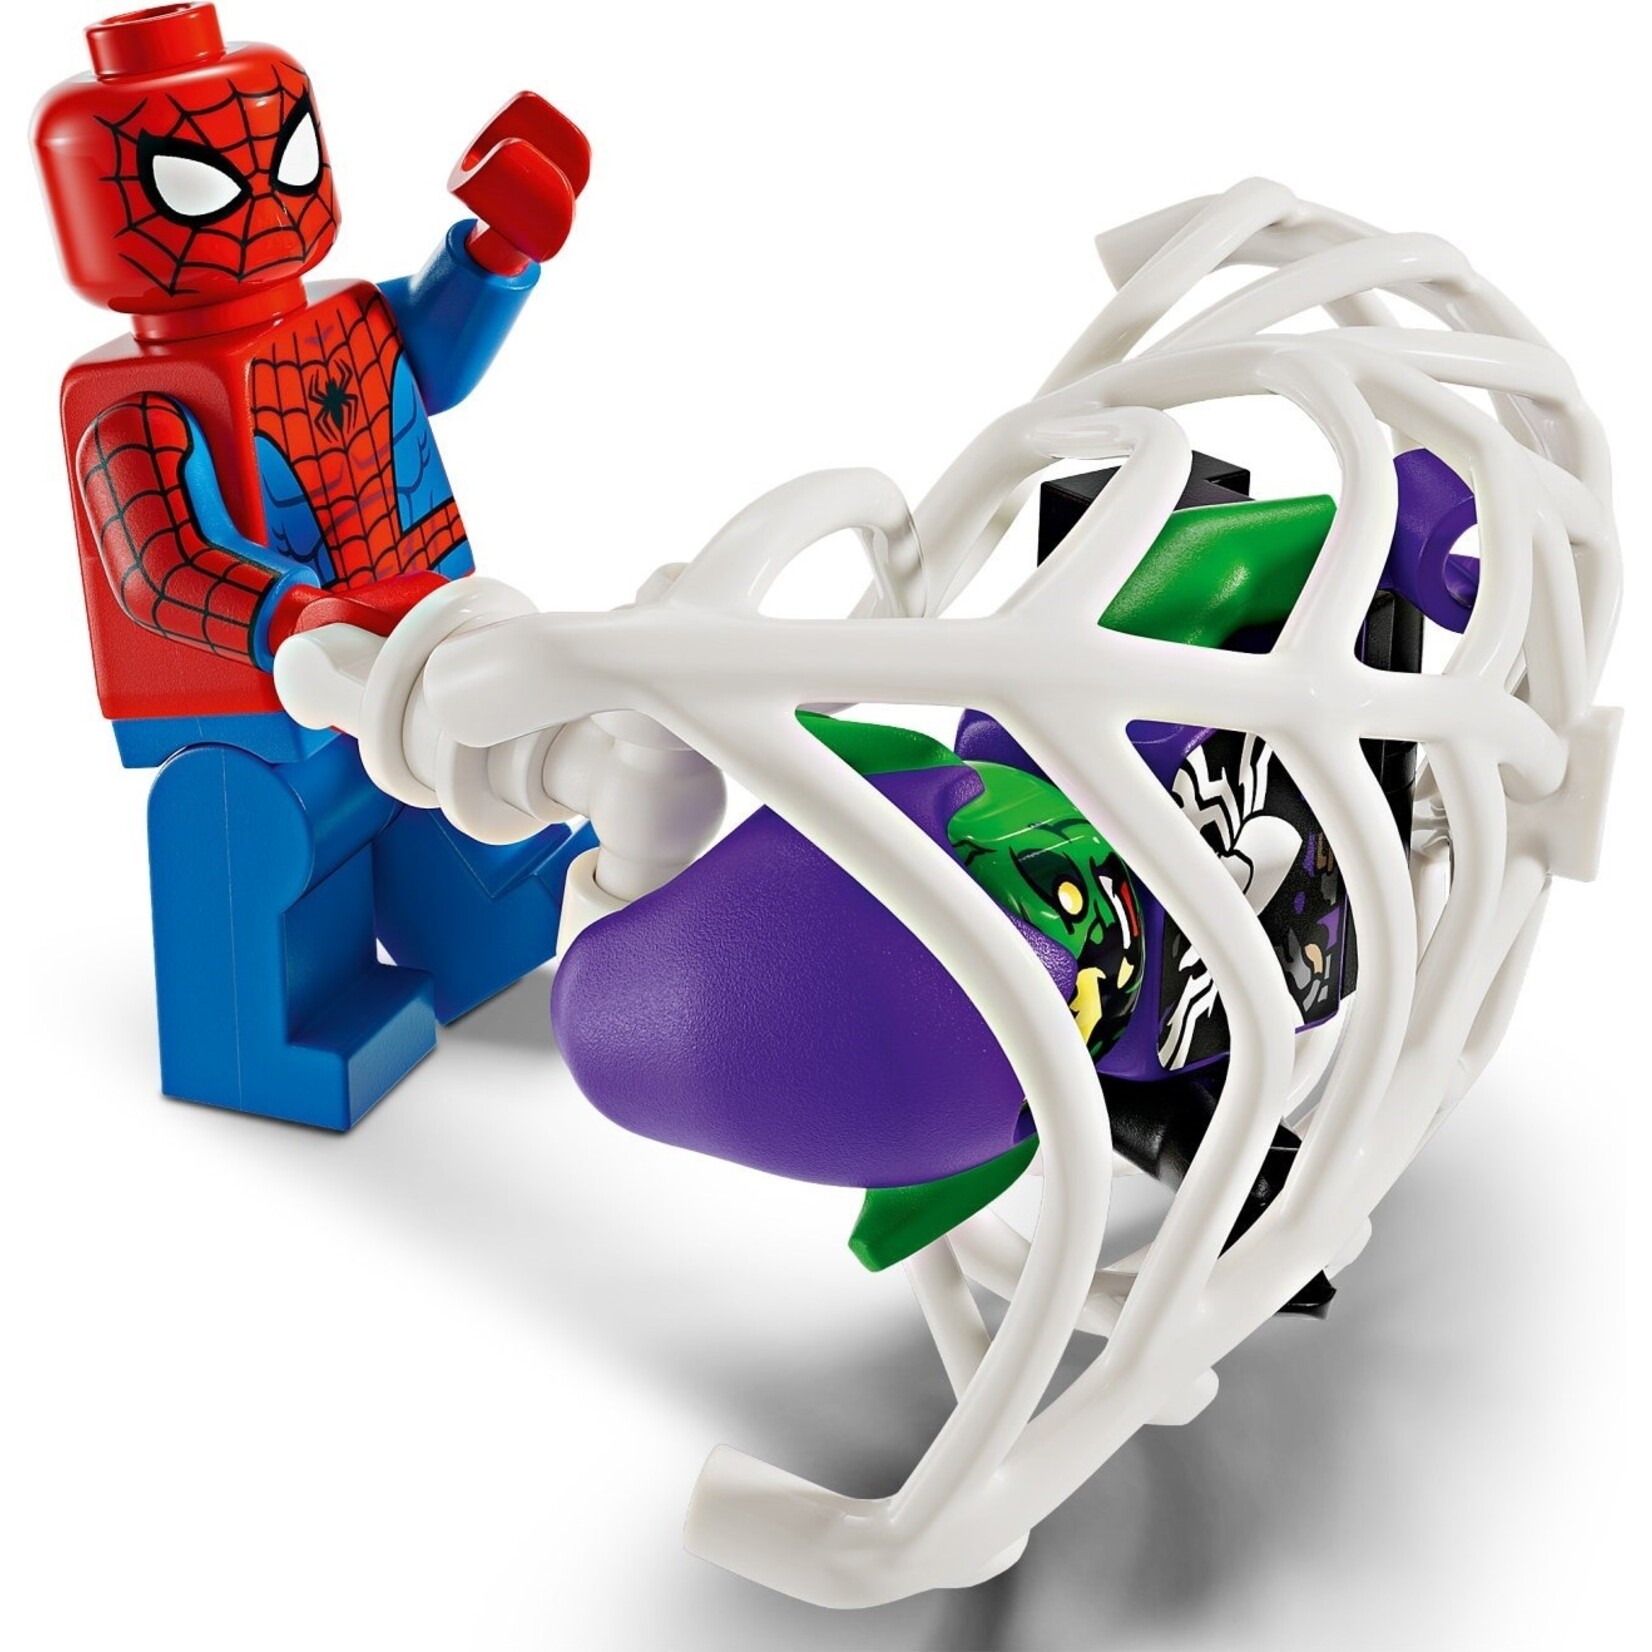 LEGO Spider-Man racewagen en Venom Green Goblin- 76279